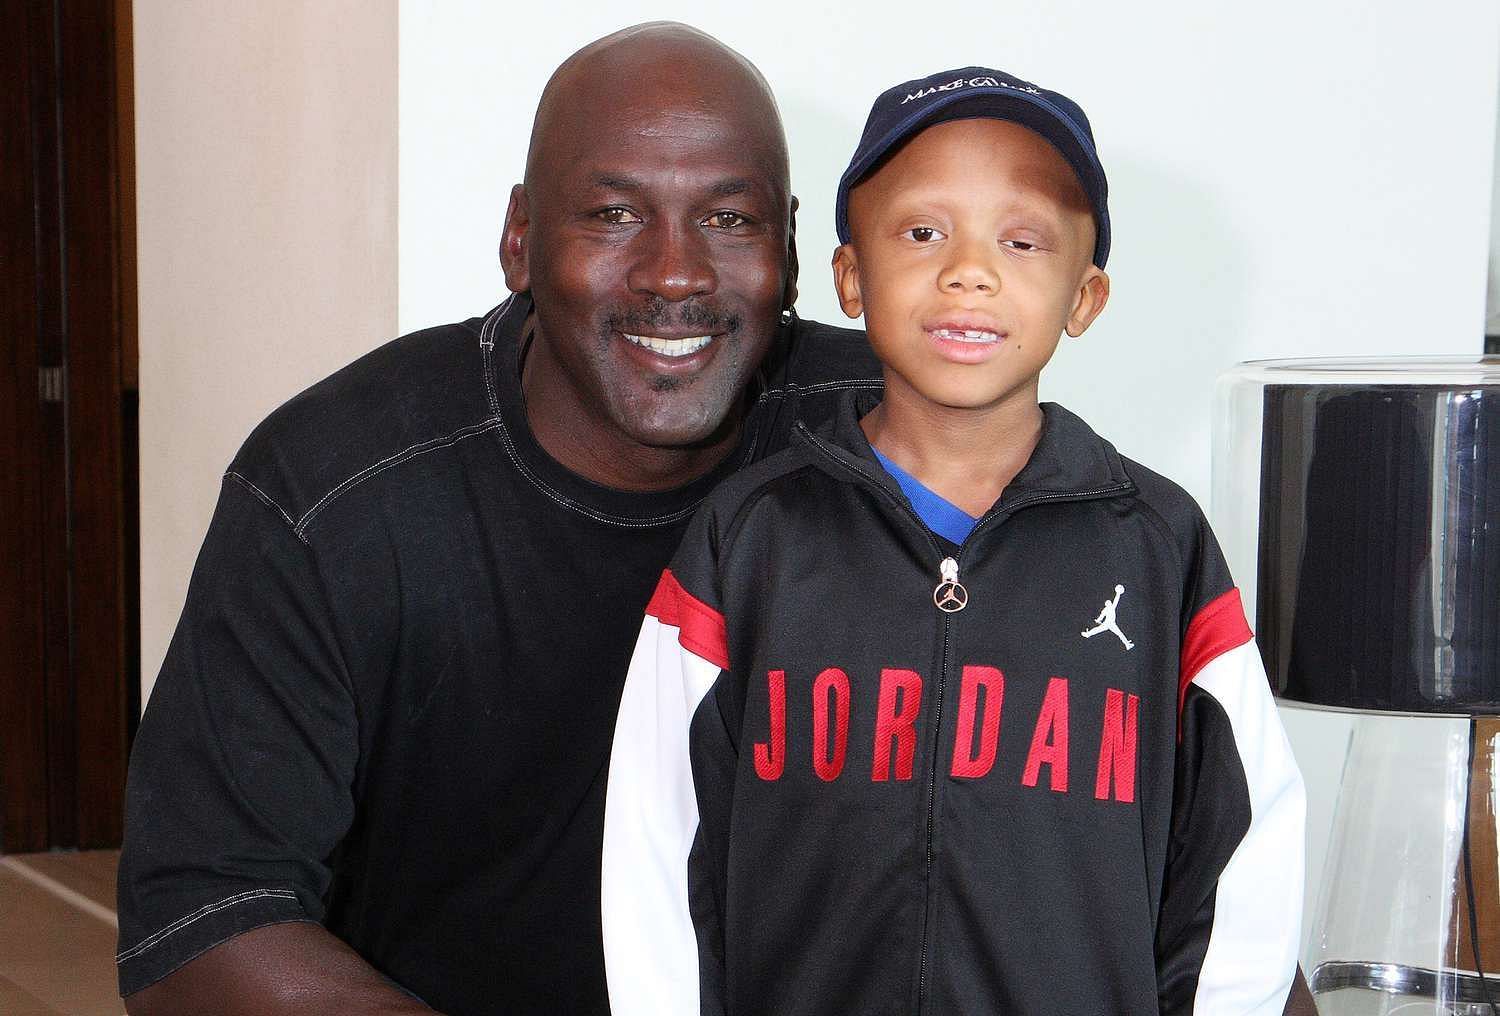 Michael Jordan granting a wish for Make-A-Wish Foundation. (Photo: People Magazine)